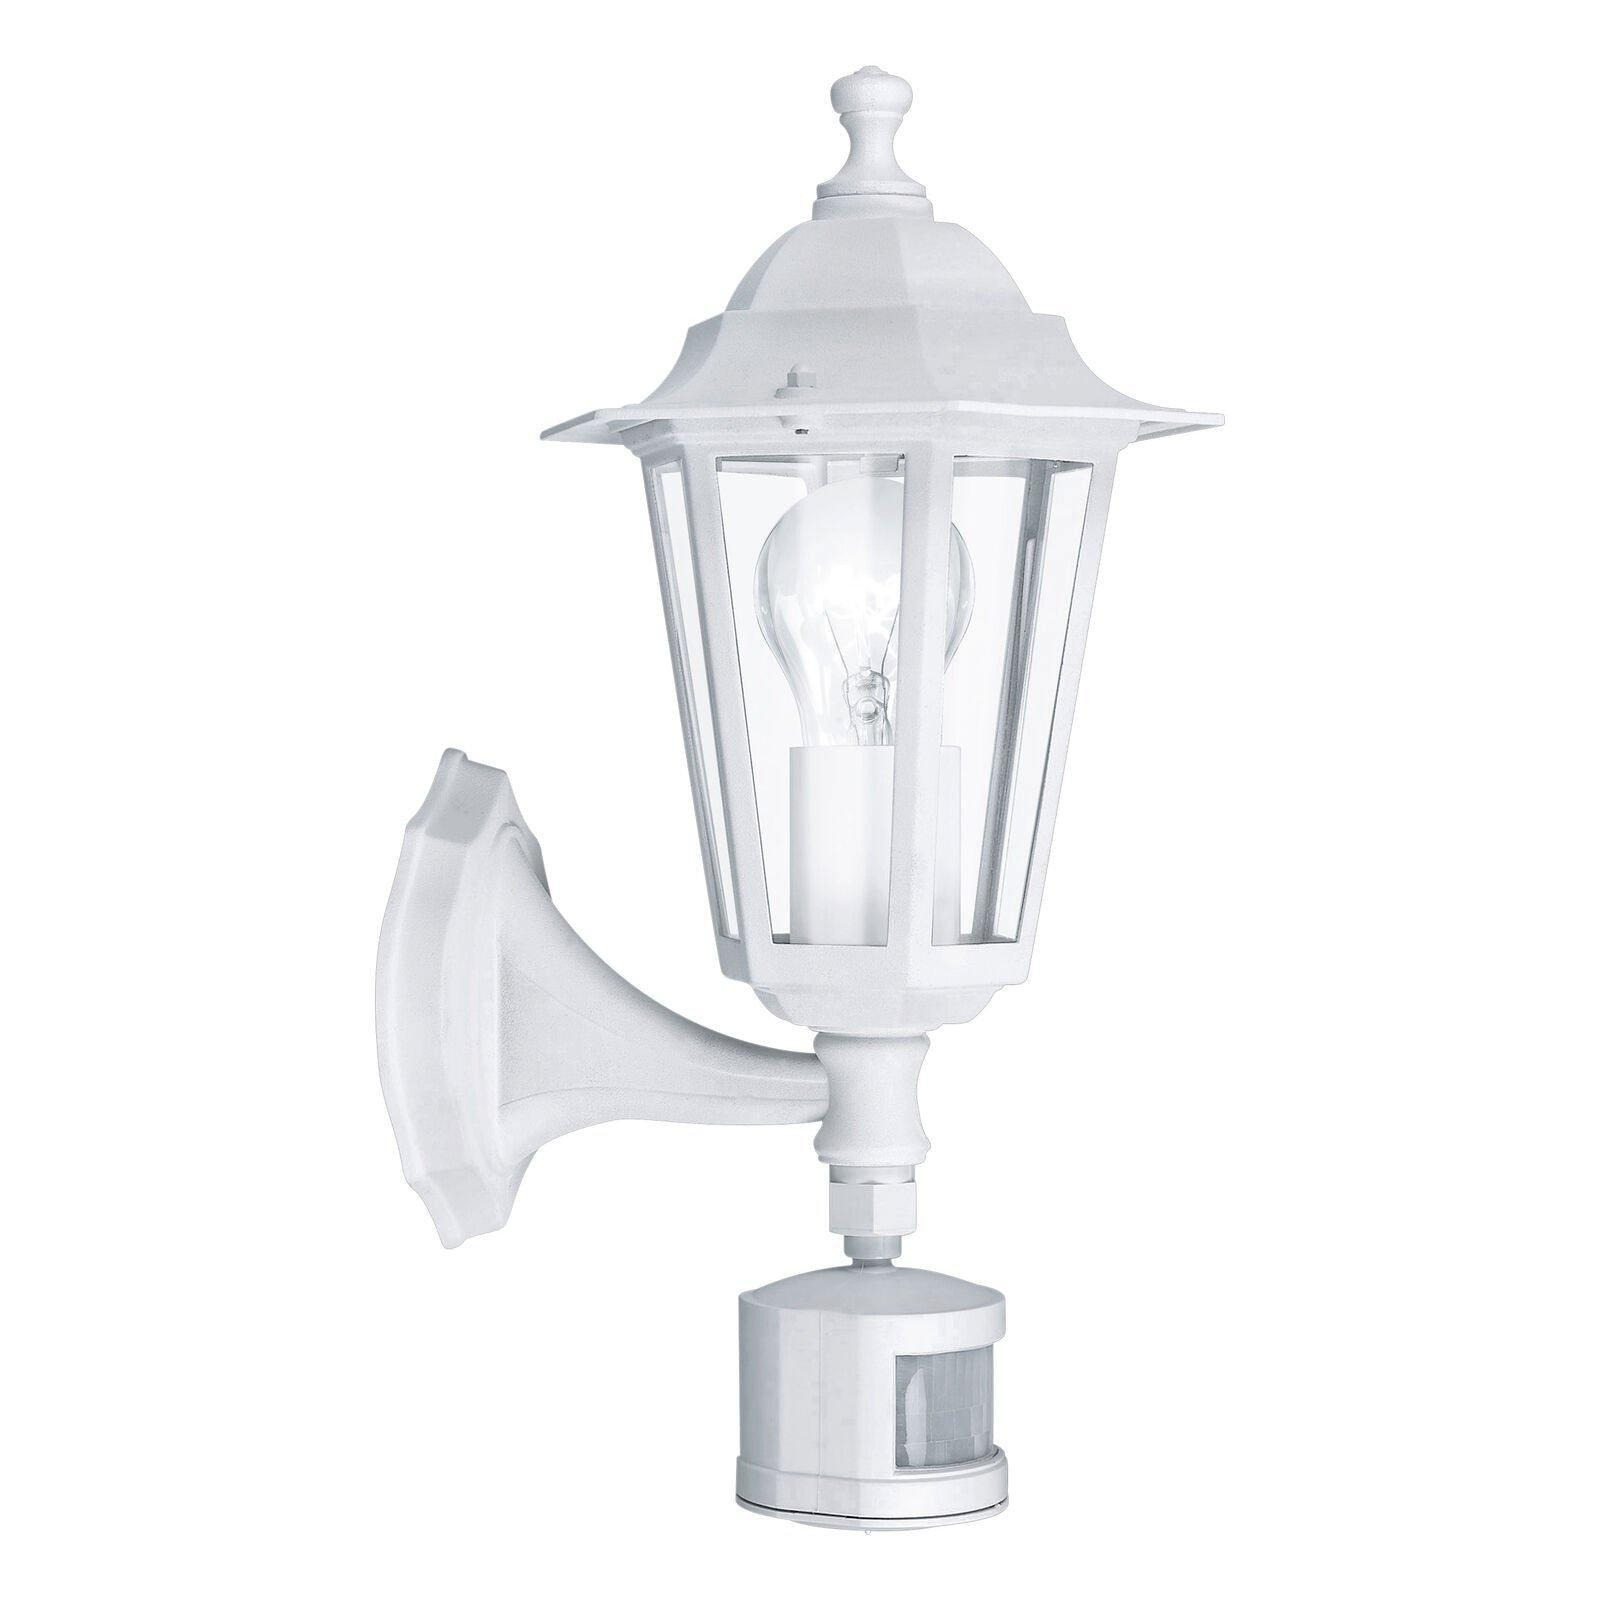 IP44 Outdoor Wall Light & PIR Sensor White Aluminium Lantern 1x 60W E27 Bulb - image 1